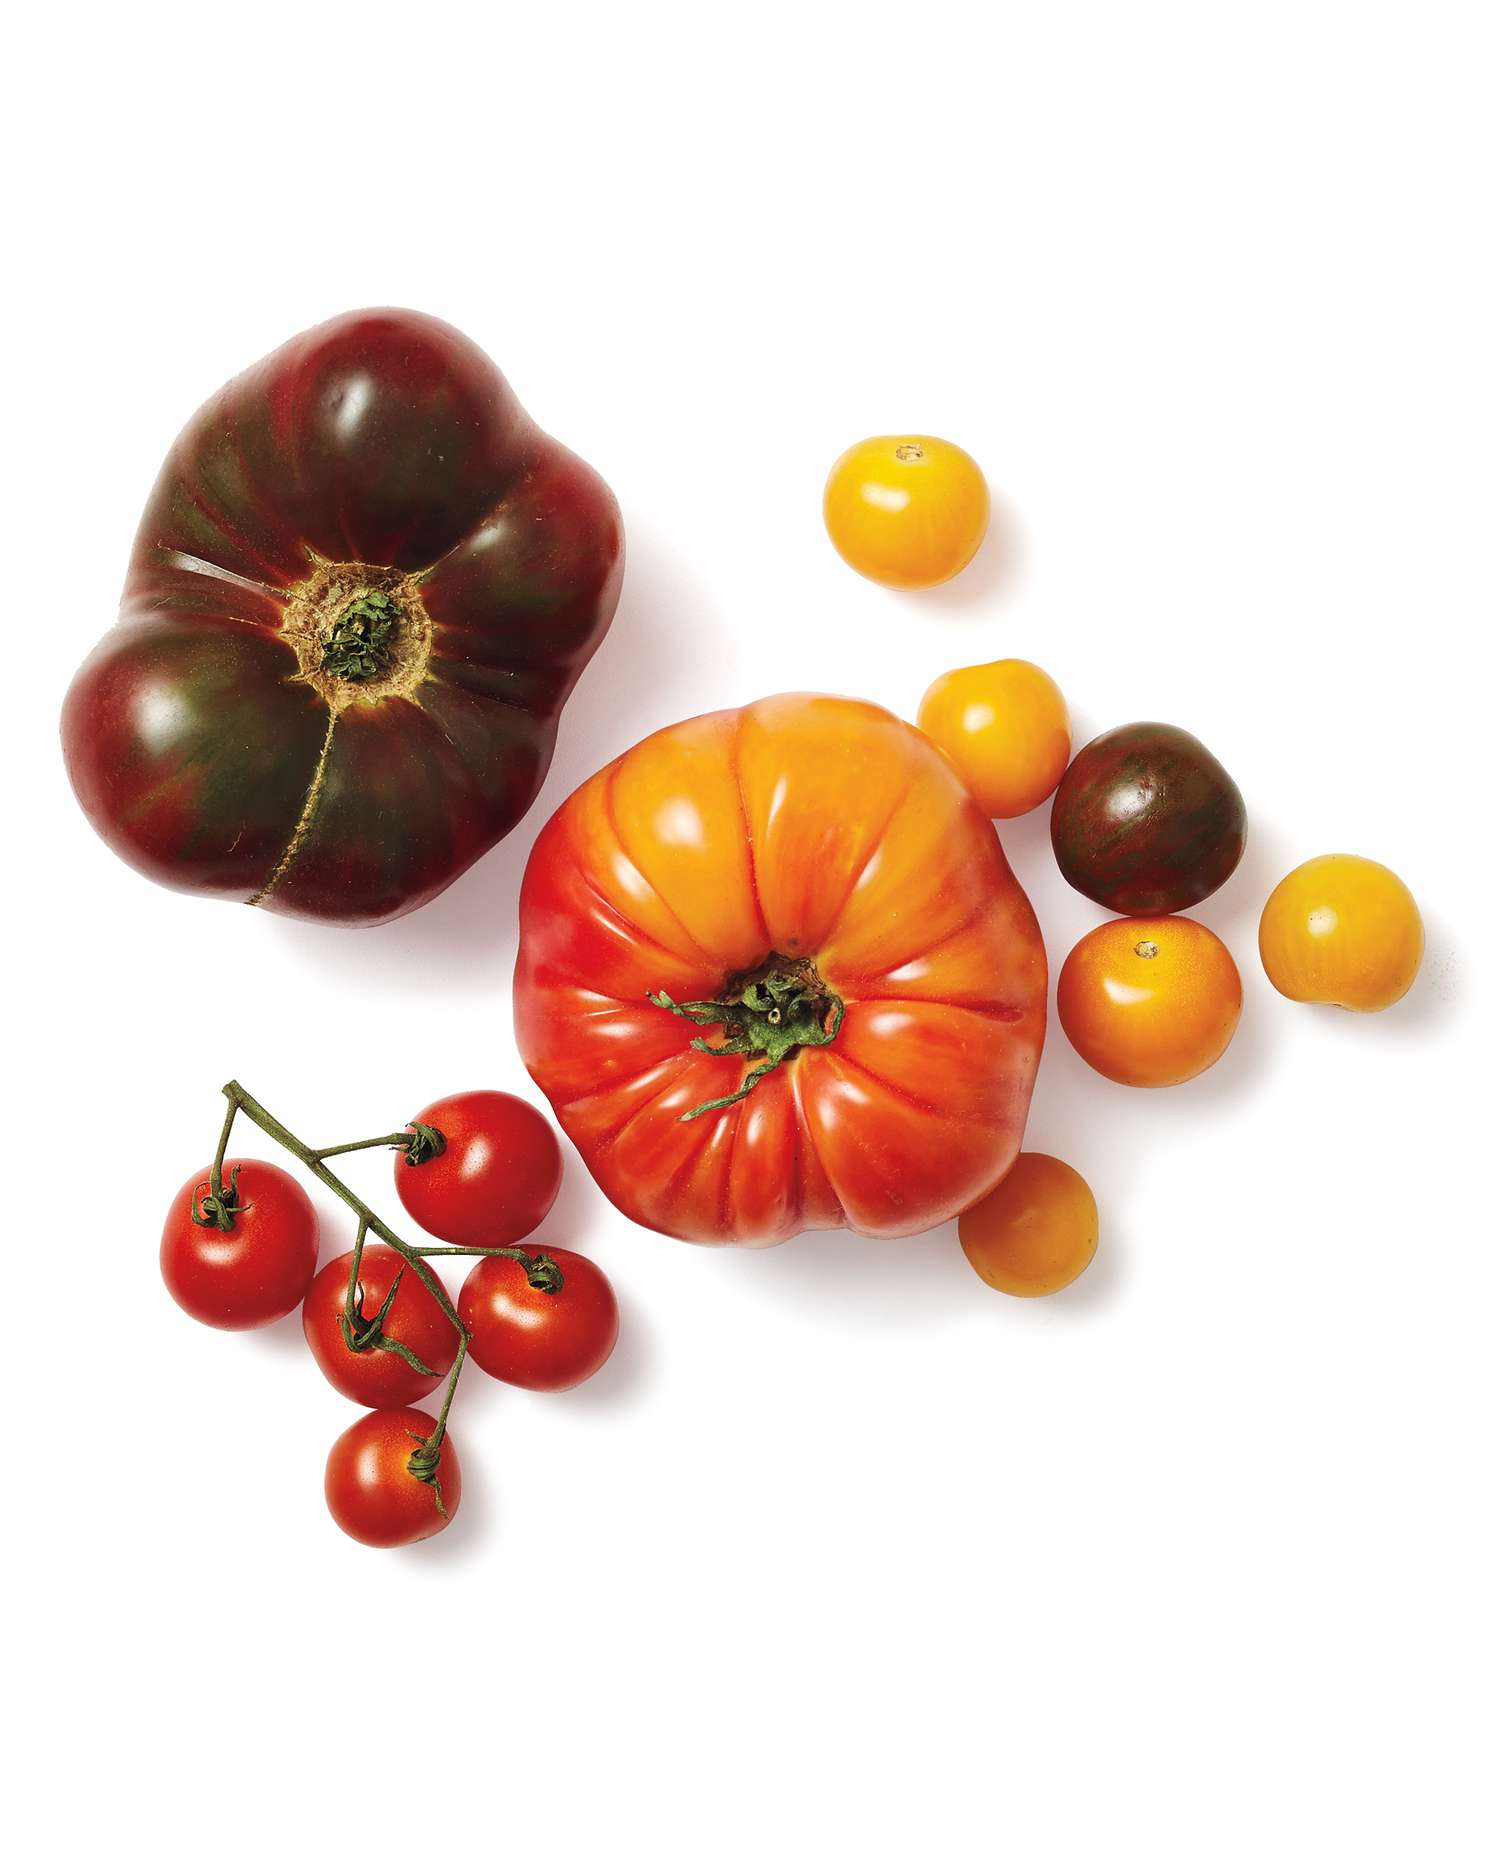 produce-tomato-silo-145-d111919.jpg